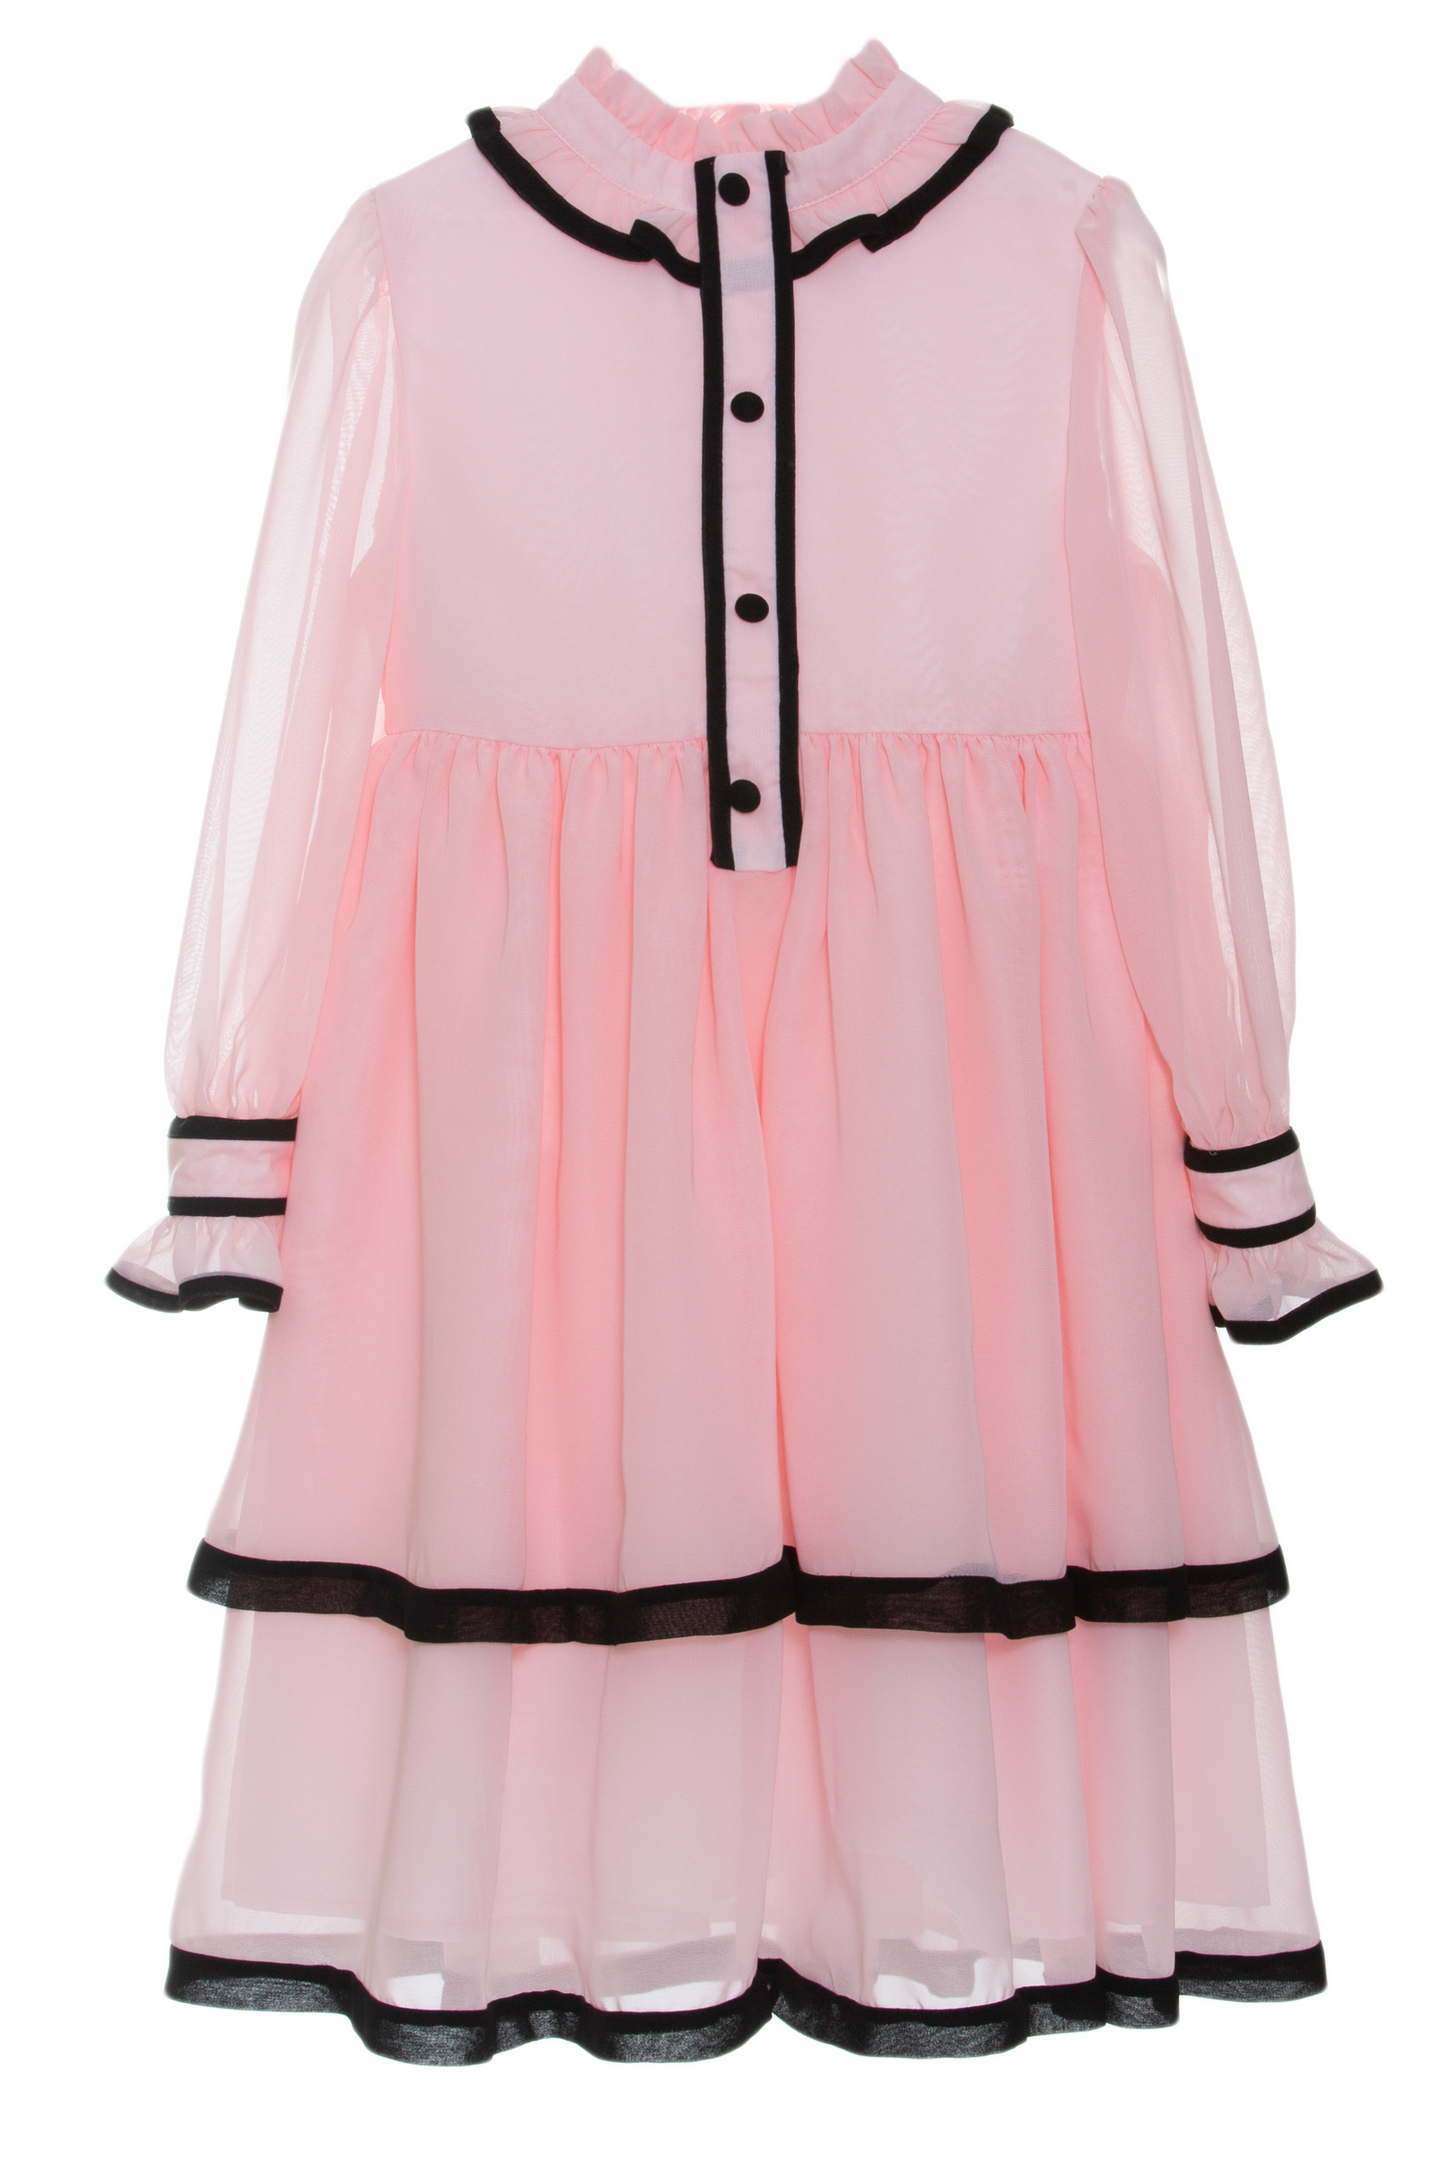 Pale Pink With Black Trim Dress